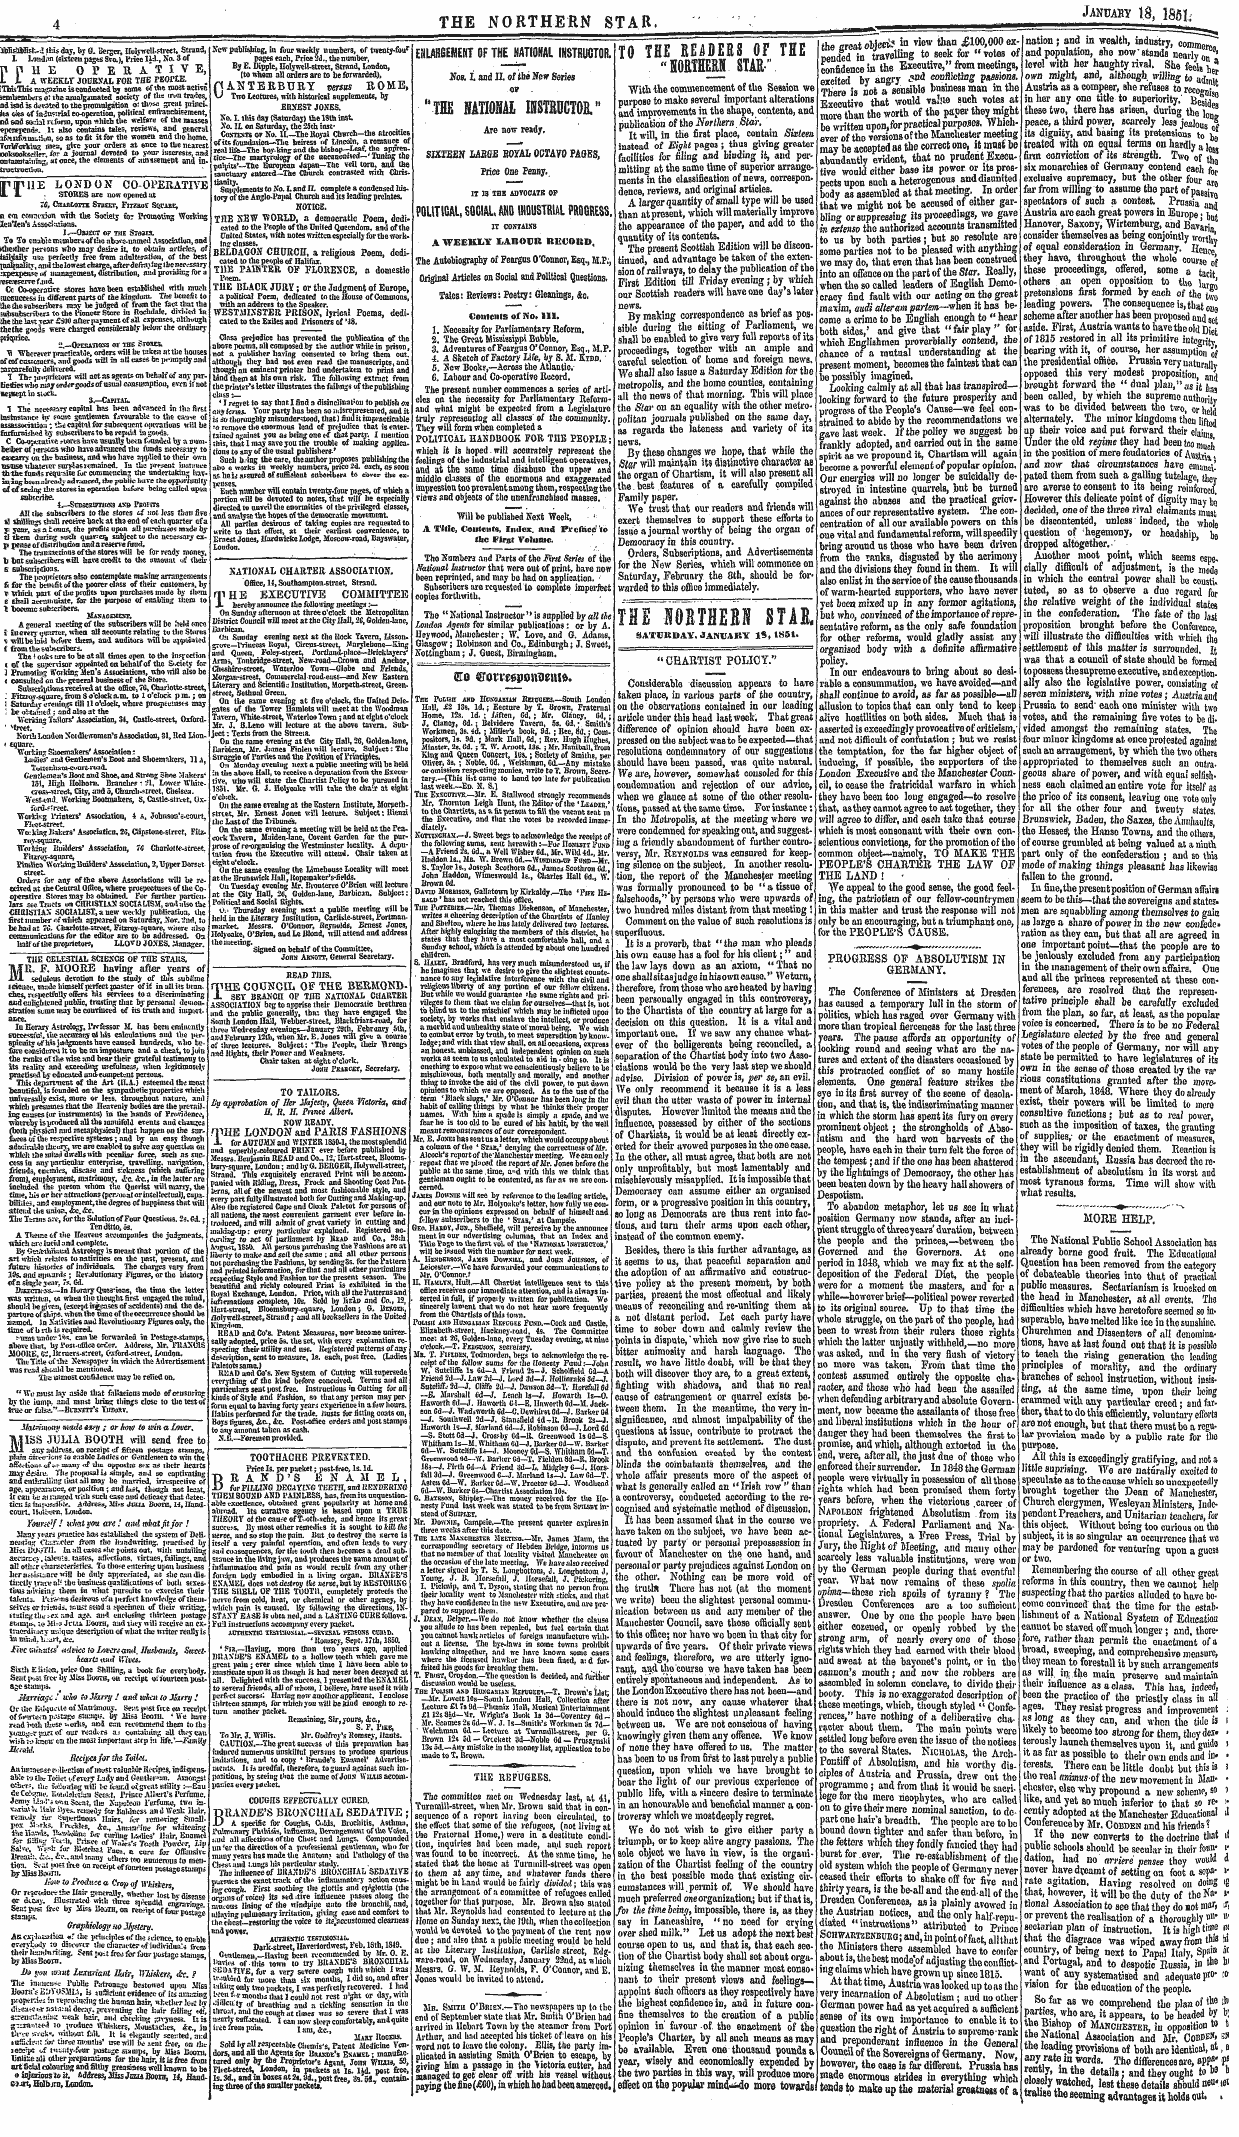 Northern Star (1837-1852): jS F Y, 3rd edition - Ad00420